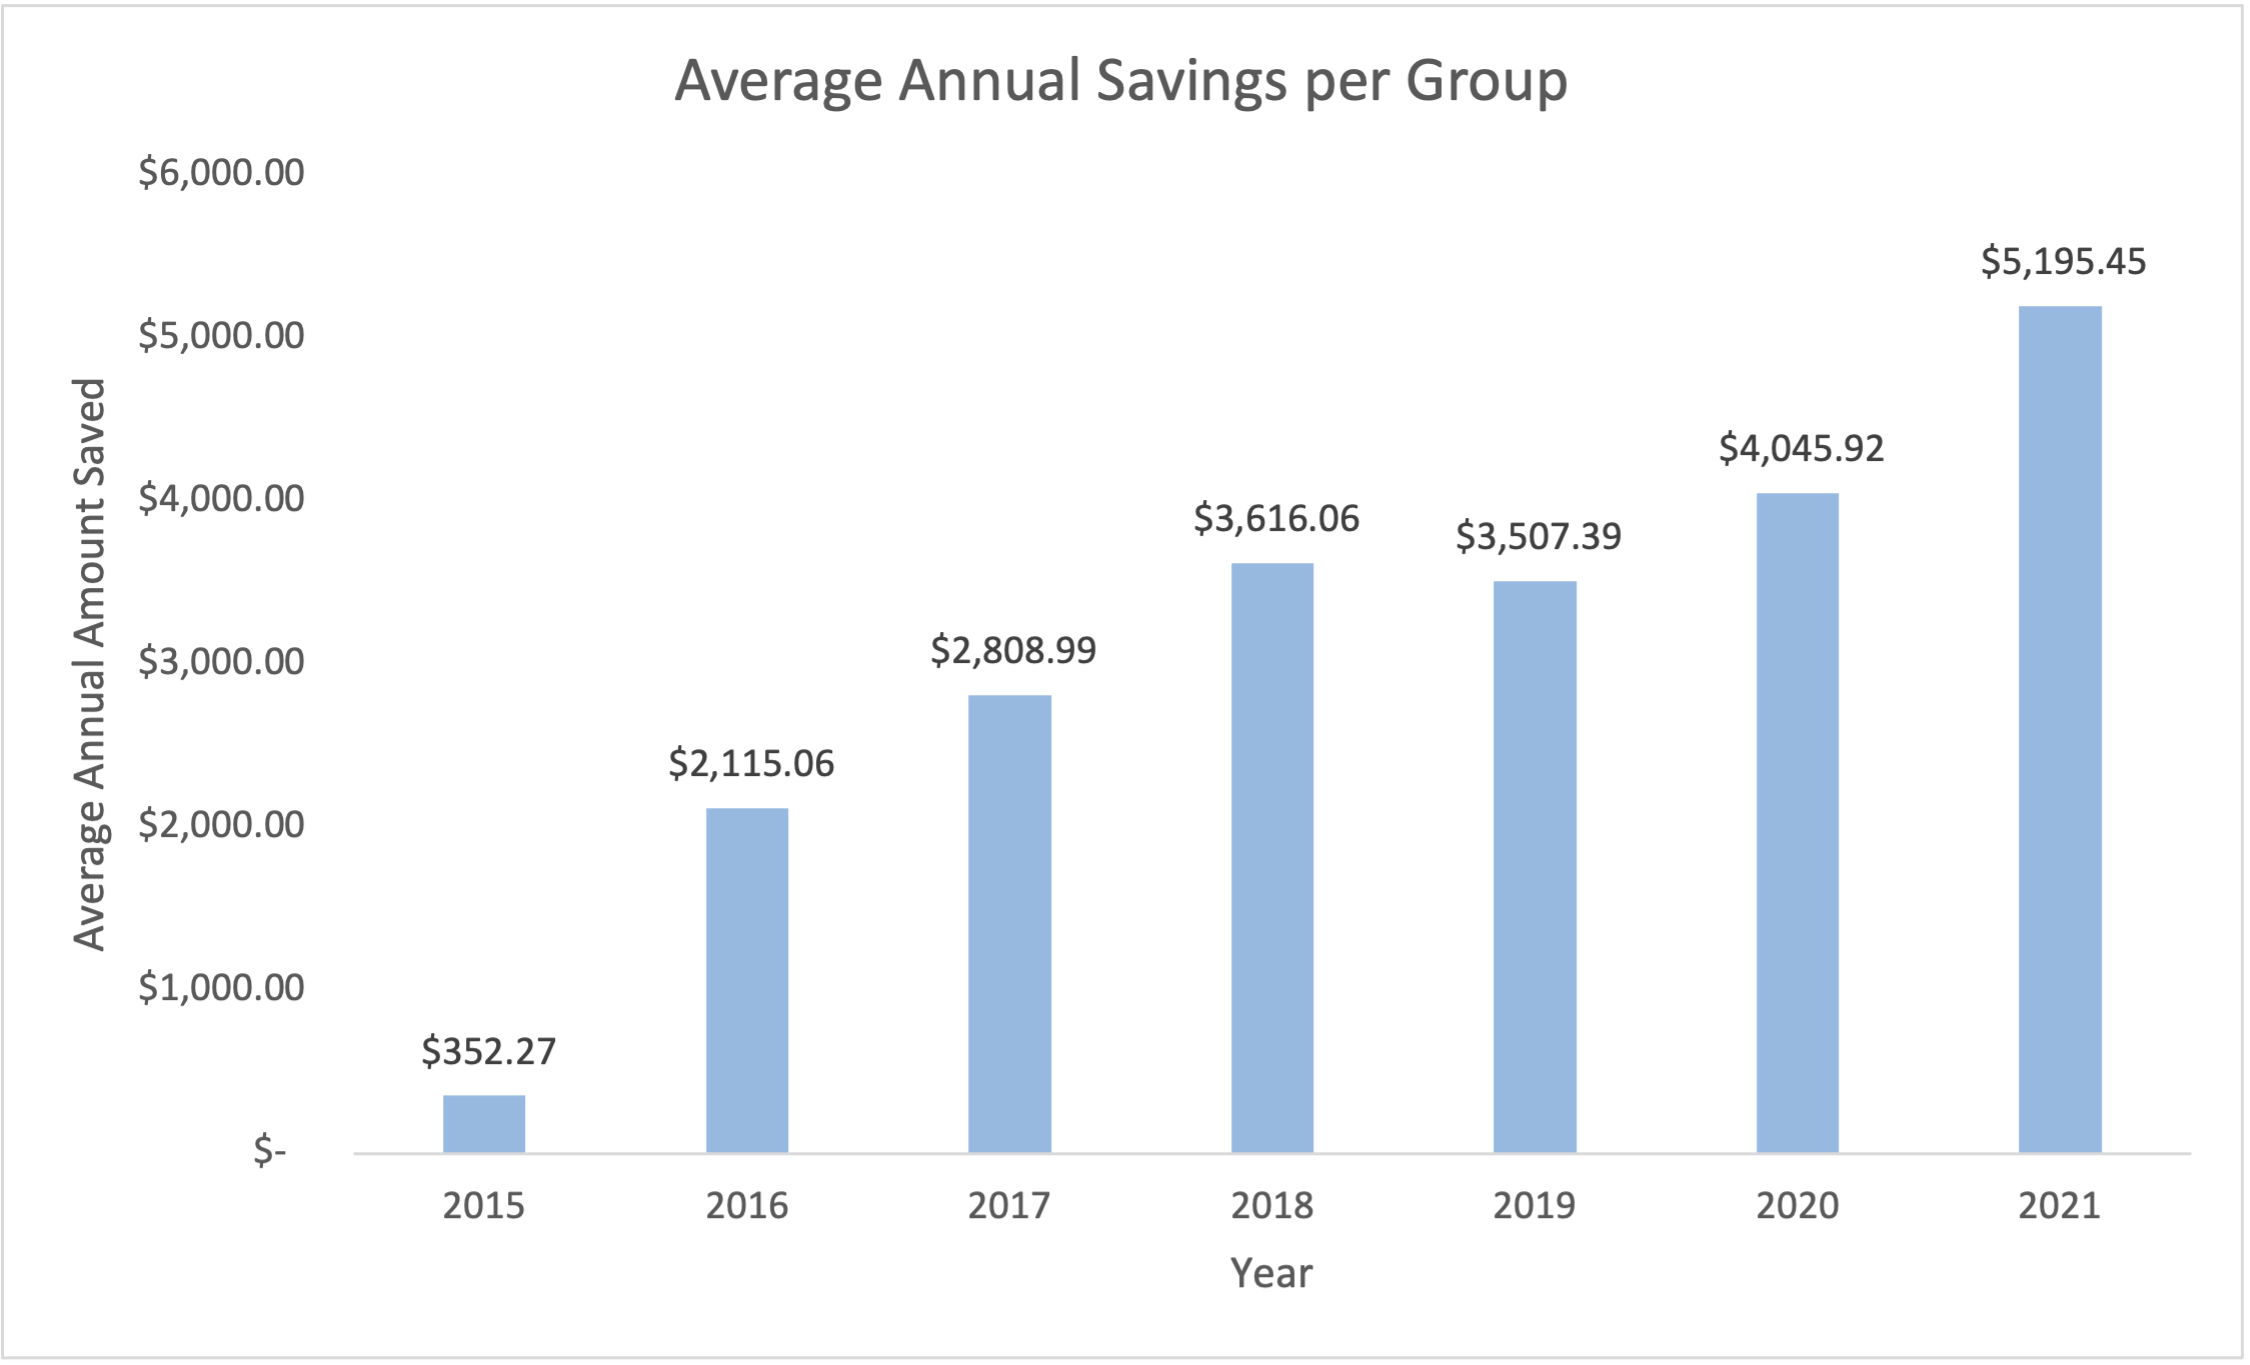 2021 savings per group